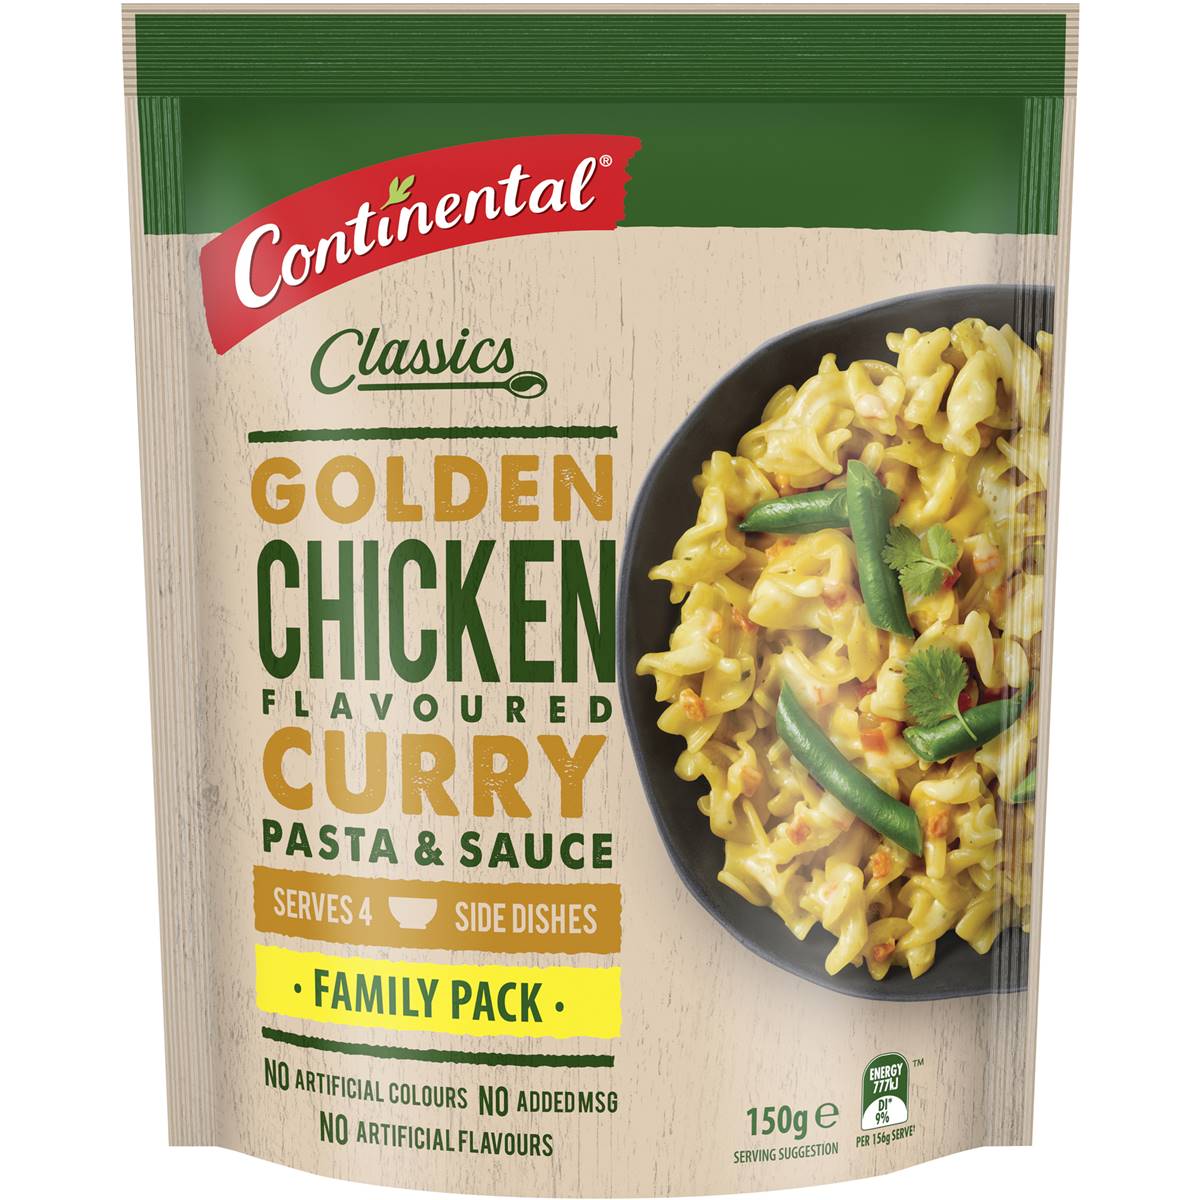 Continental Pasta & Sauce Chicken Curry